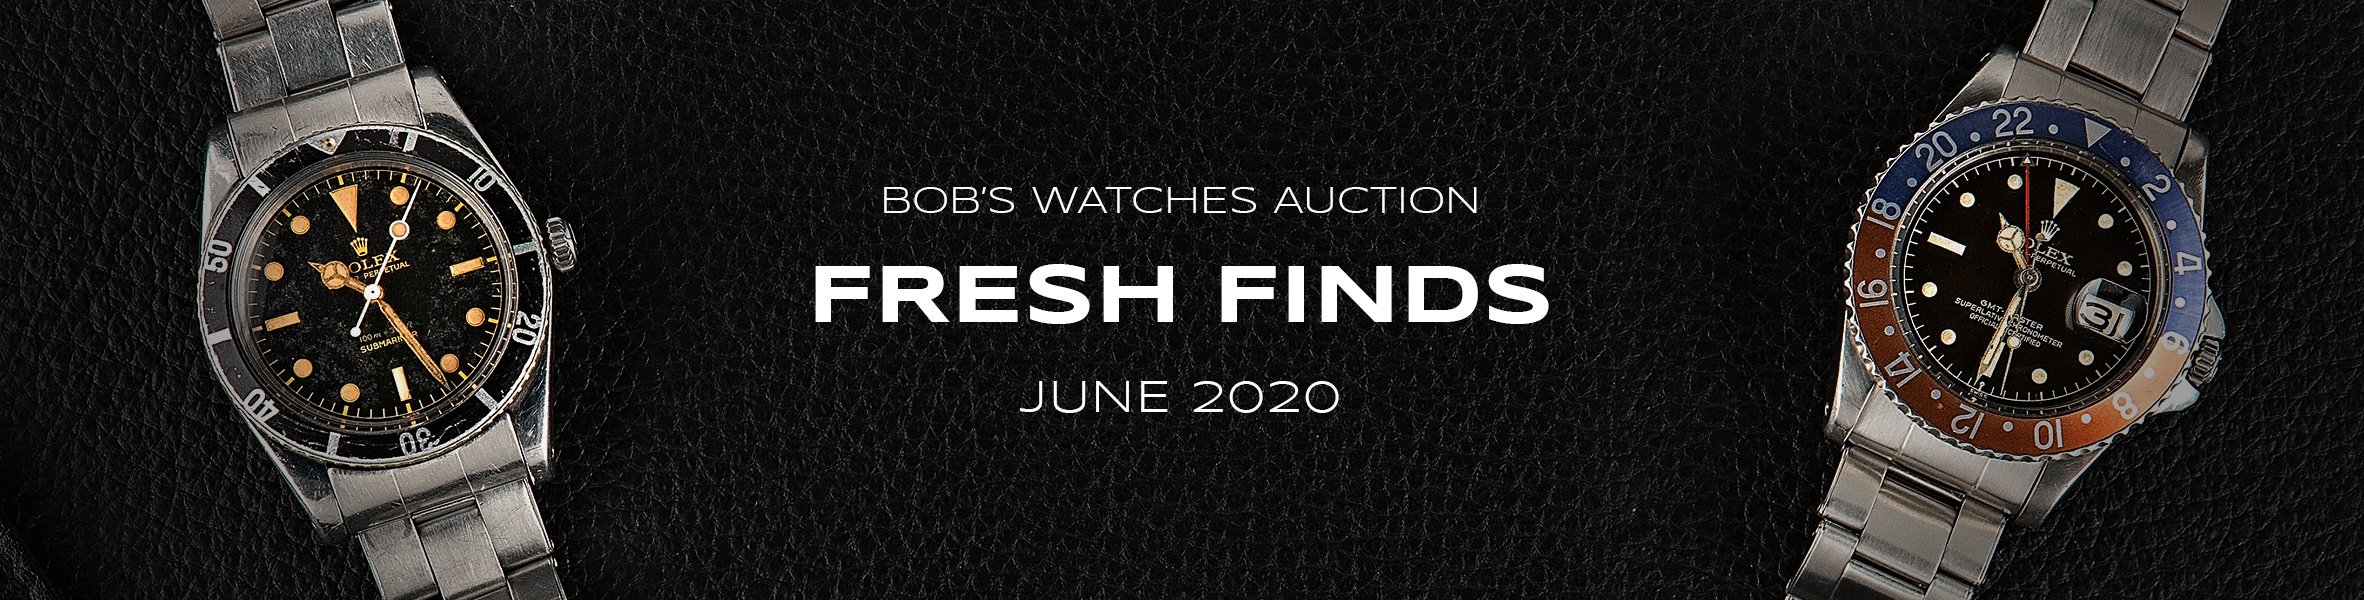 Vintage Rolex Watch Auction Results: ‘Fresh Finds’